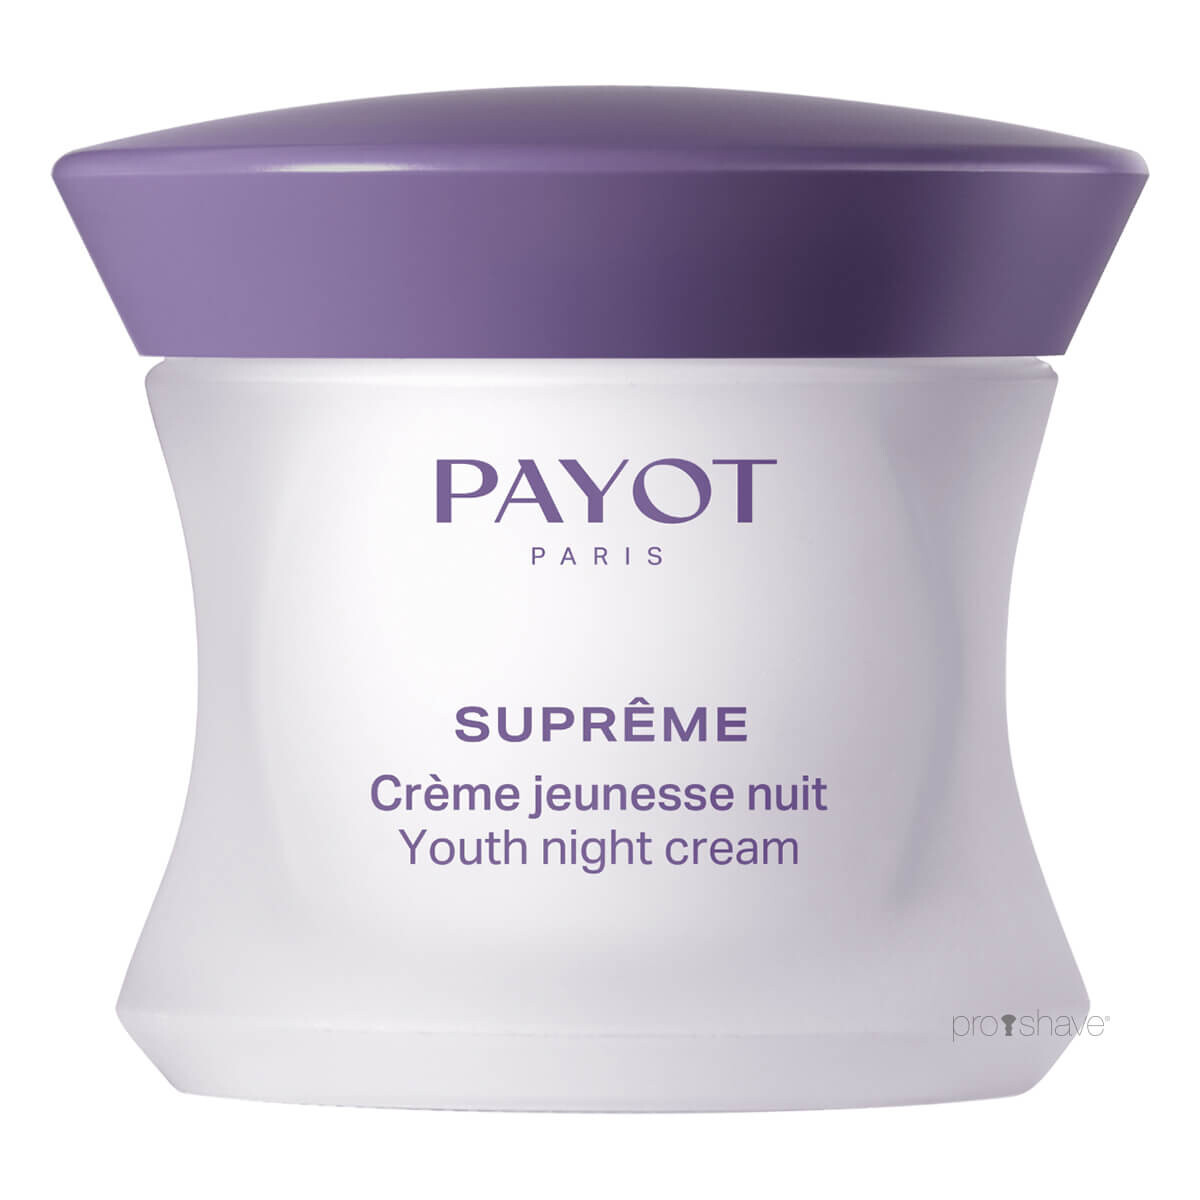 10: Payot SuprÃªme Youth Night Cream, 50 ml.